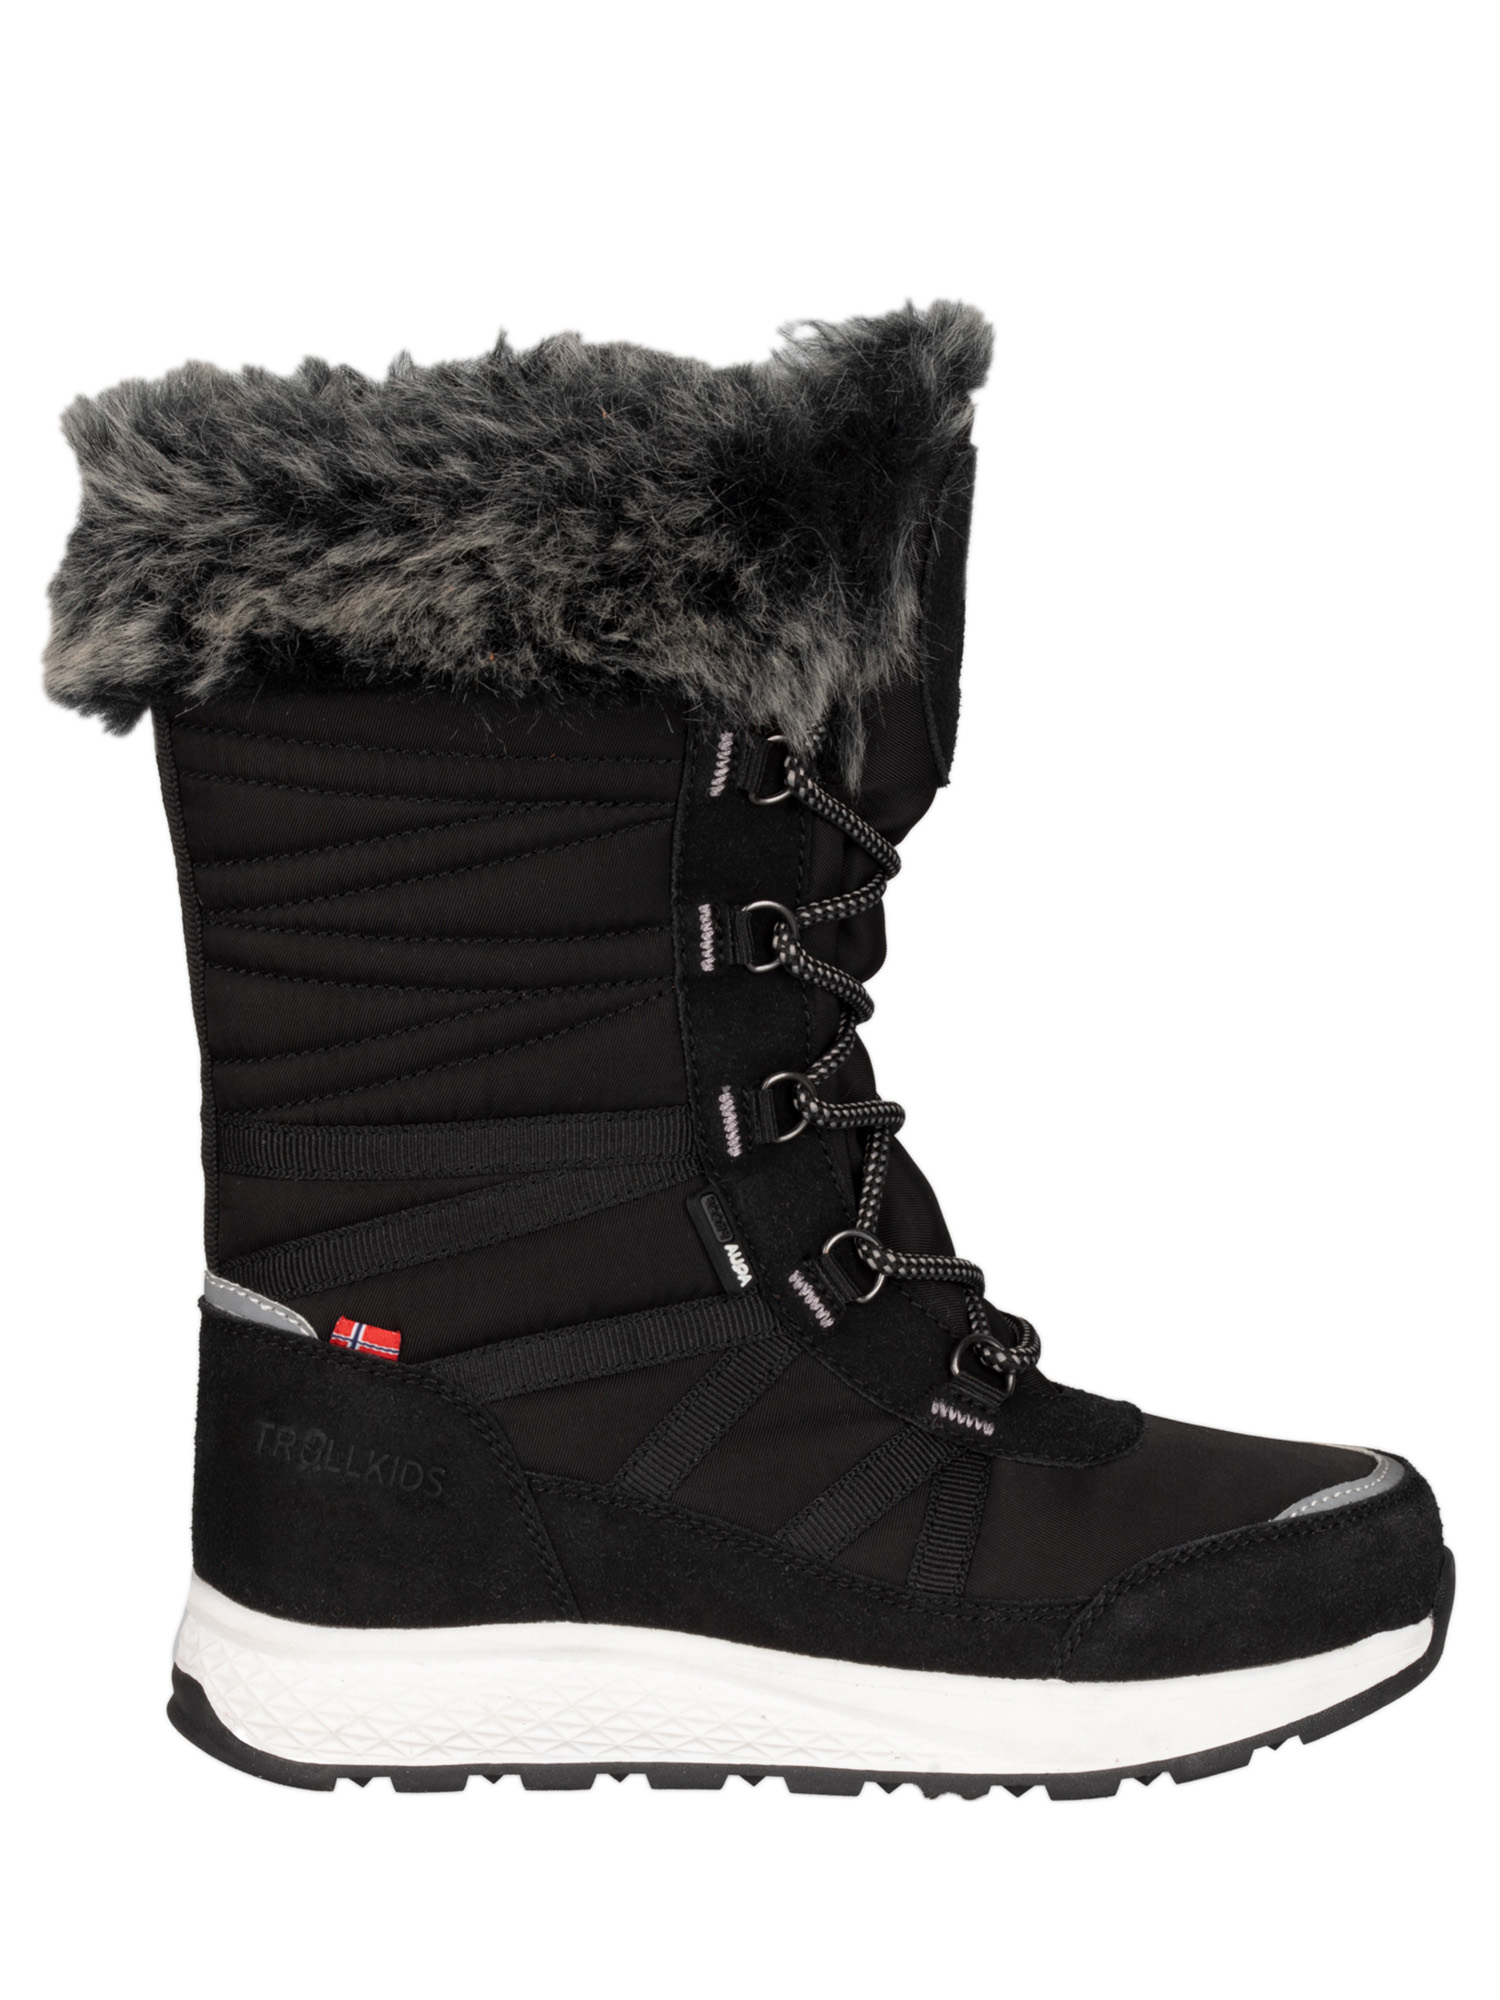 Ботинки Trollkids Girls Hemsedal Winter Boots Xt, черный, 27